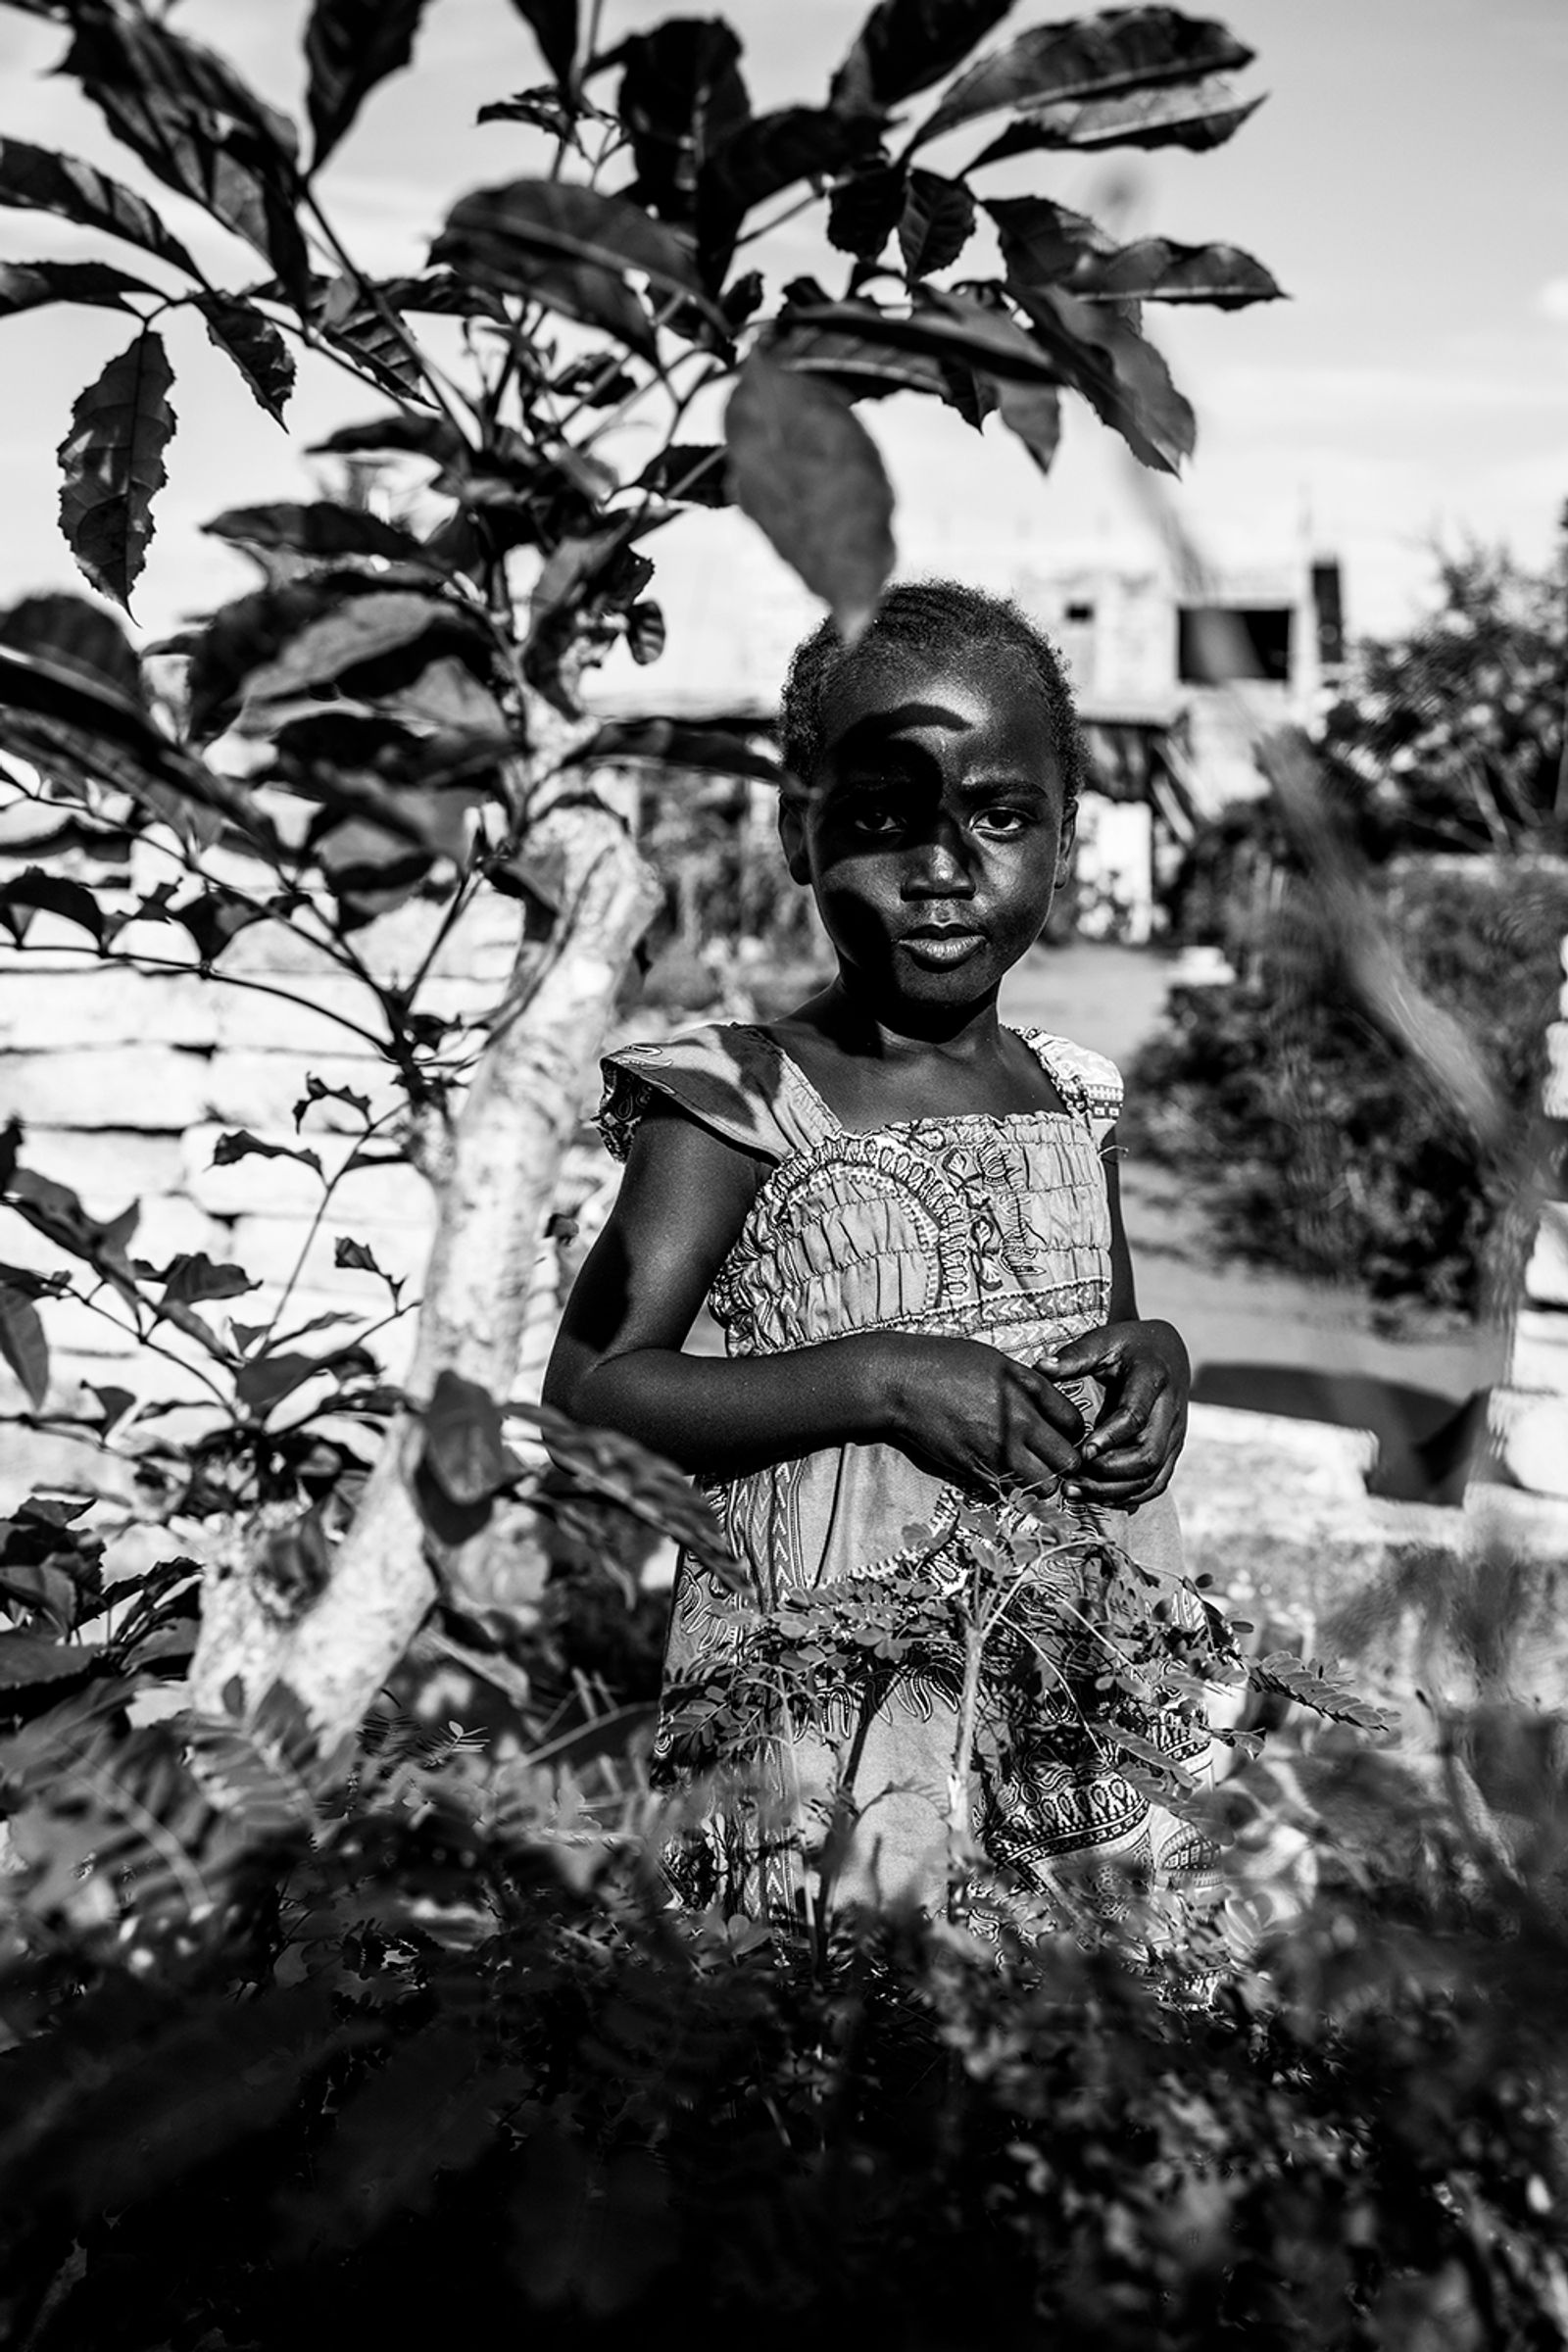 © Carla Kogelman - Image from the jolodibo - La terre de mon pere - benin photography project